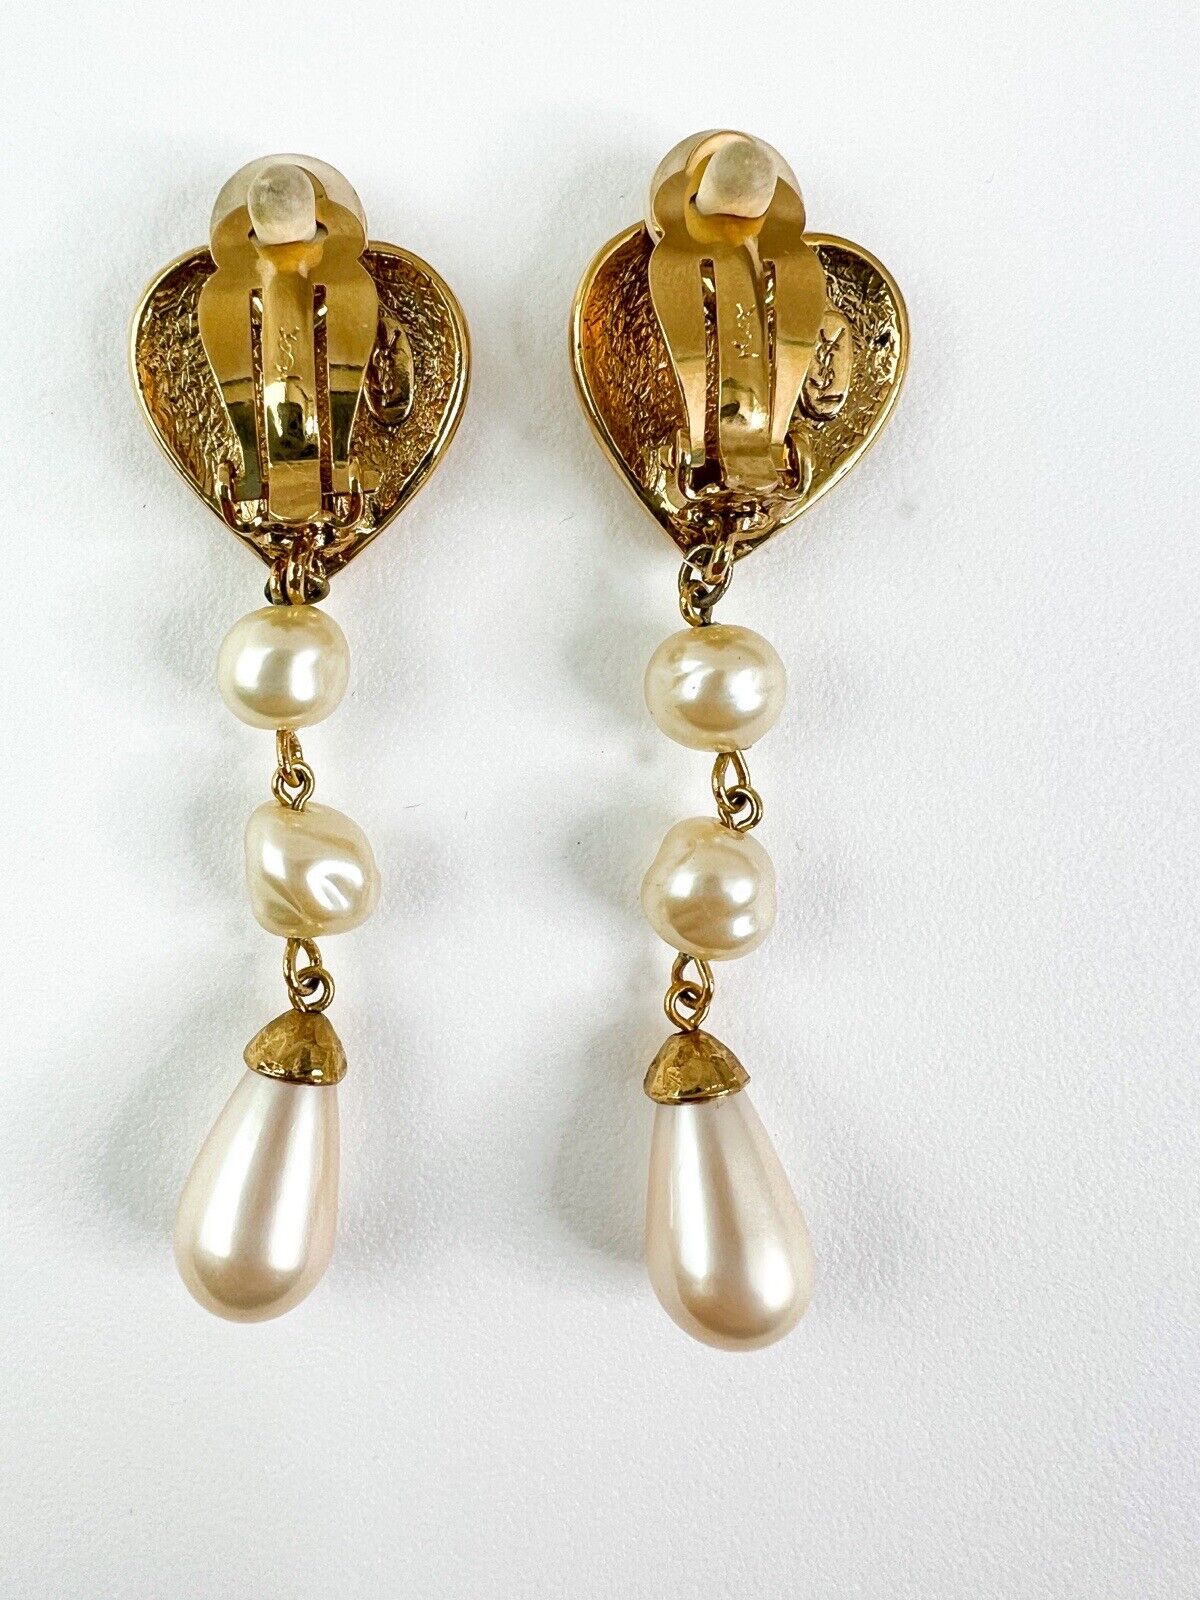 Vintage YSL Yves Saint Laurent  earrings, Earrings Dangle Gold, Earrings heart pearl, Heart Drop Dangling Earrings, Vintage Rhinestone